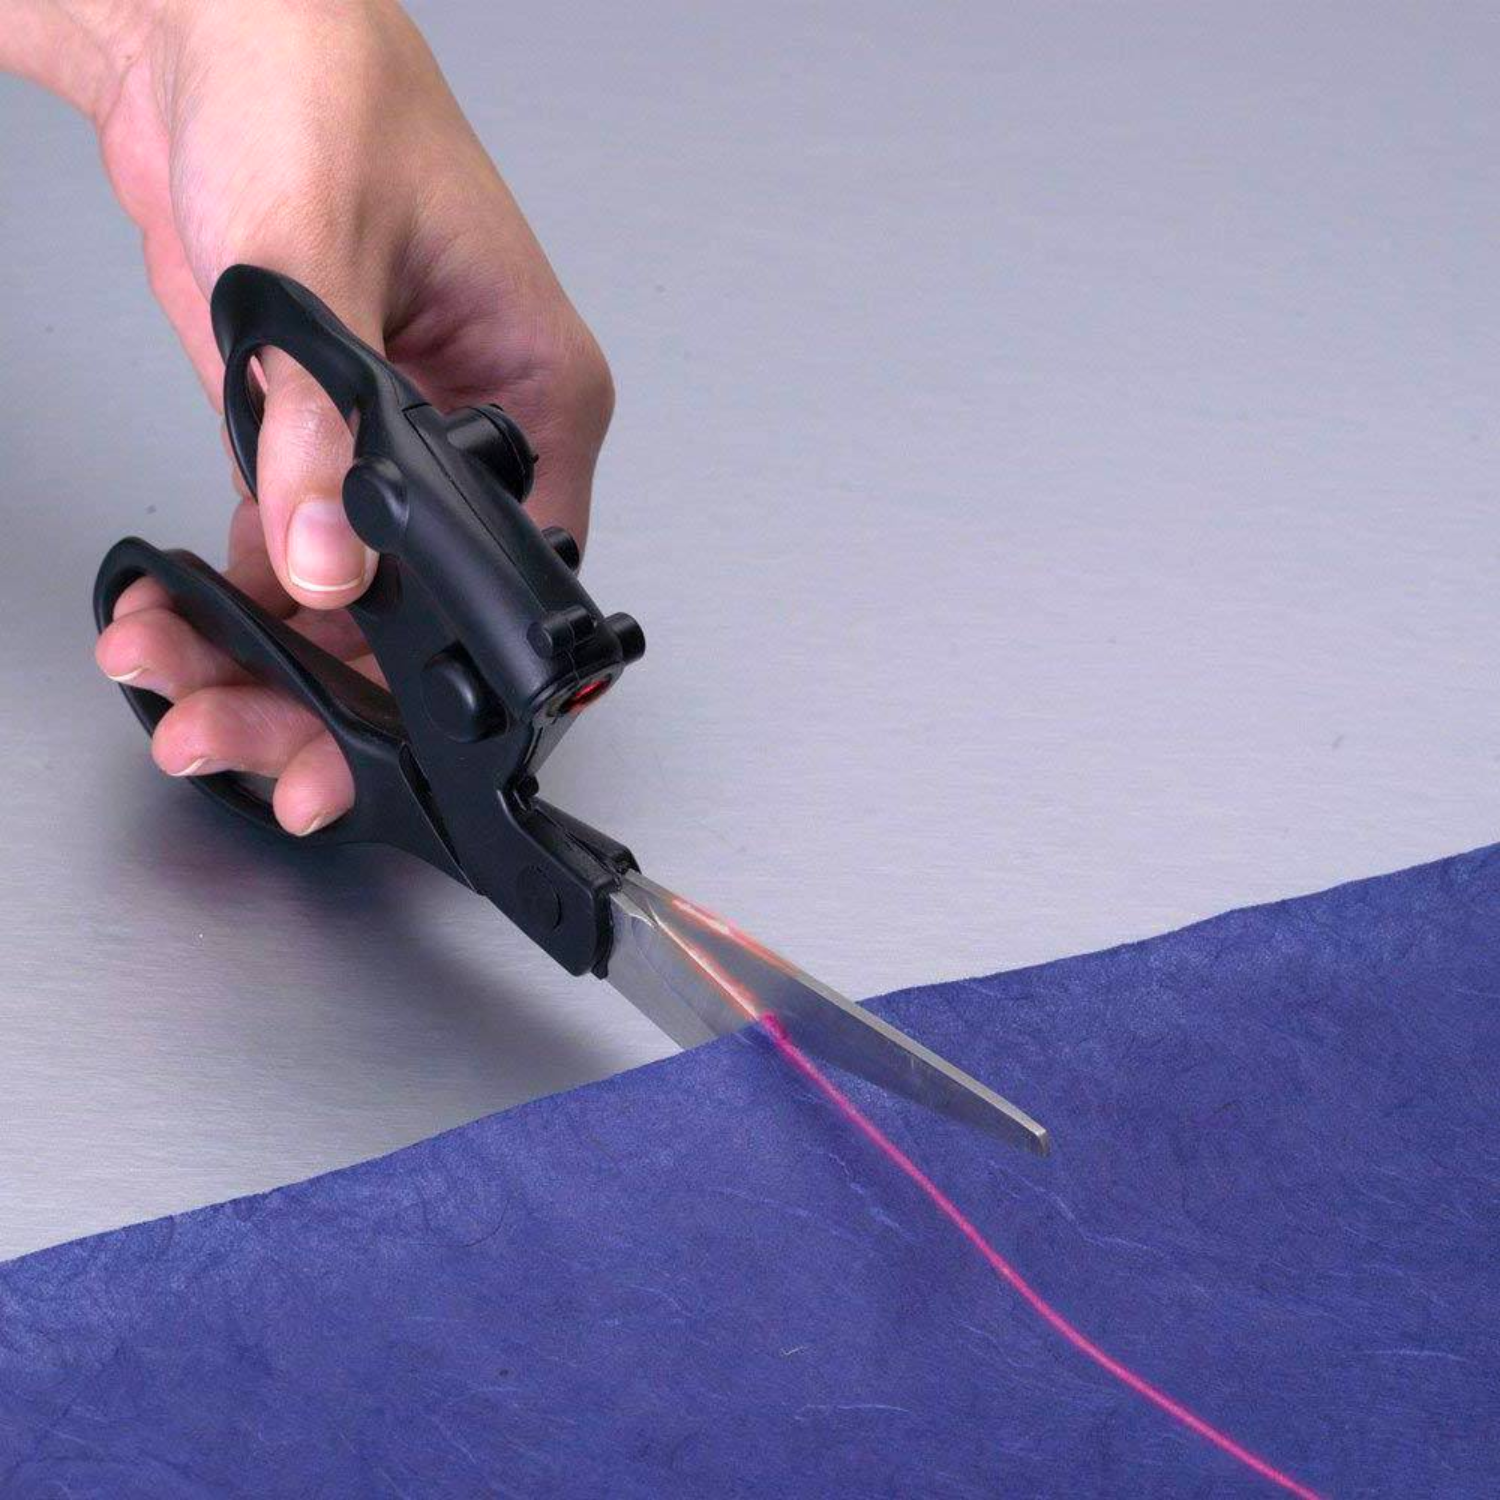 pro sewing laser guided scissors fabric scissors